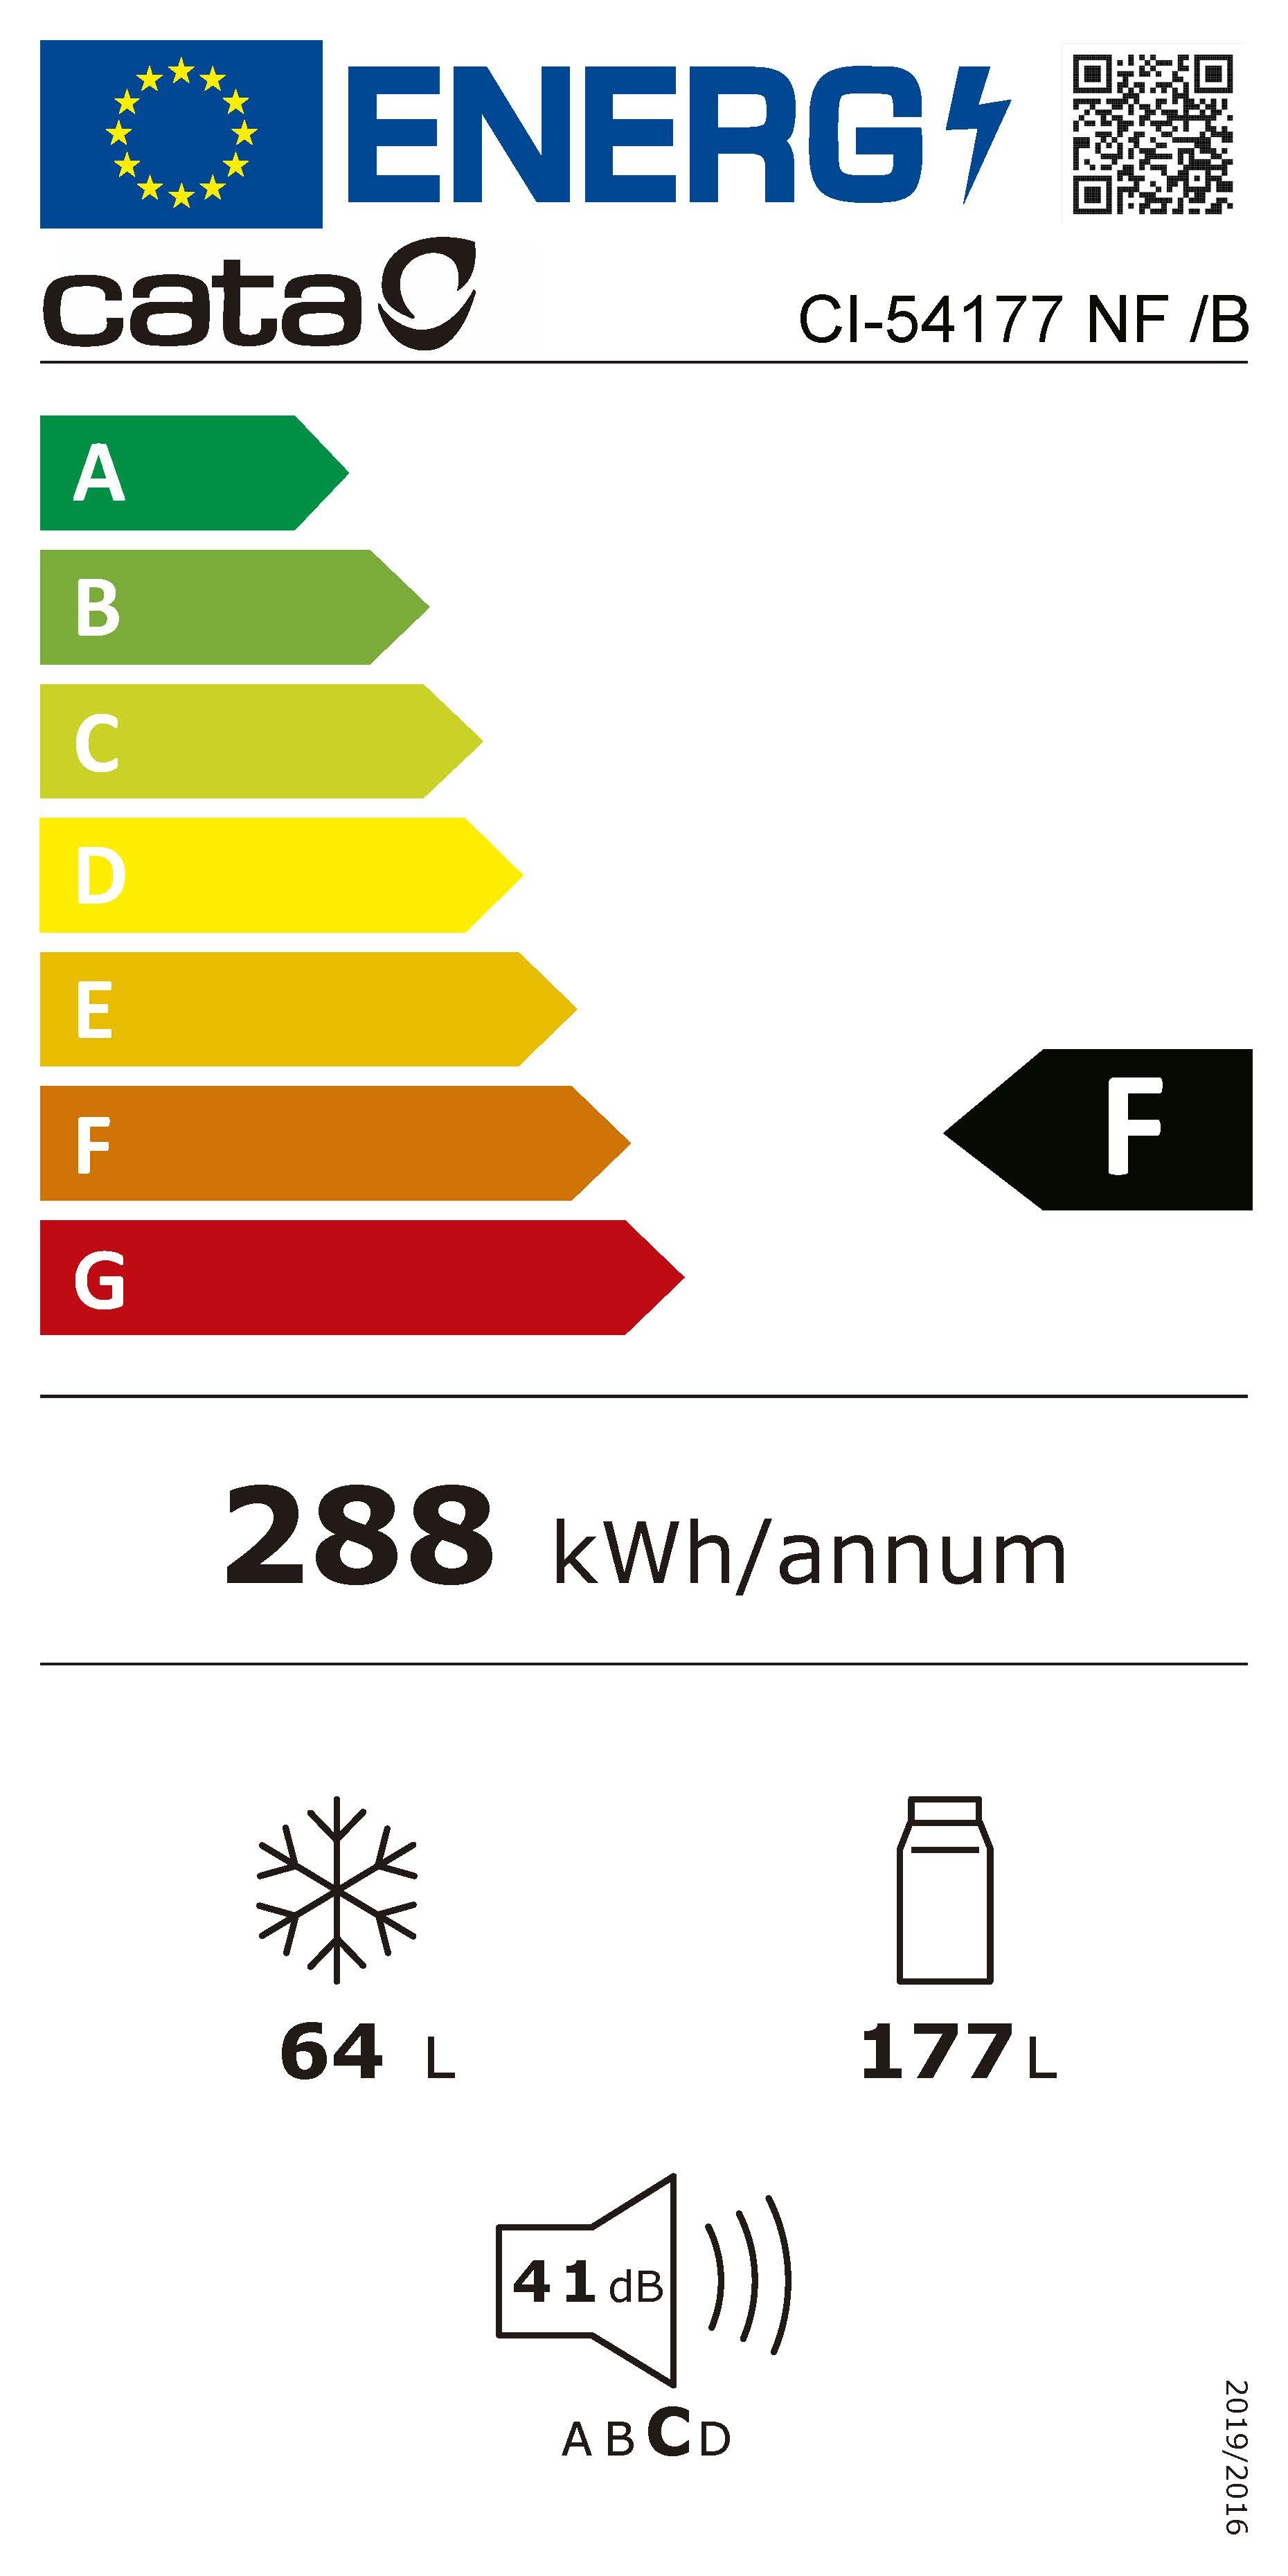 Etiqueta de Eficiencia Energética - 7800079